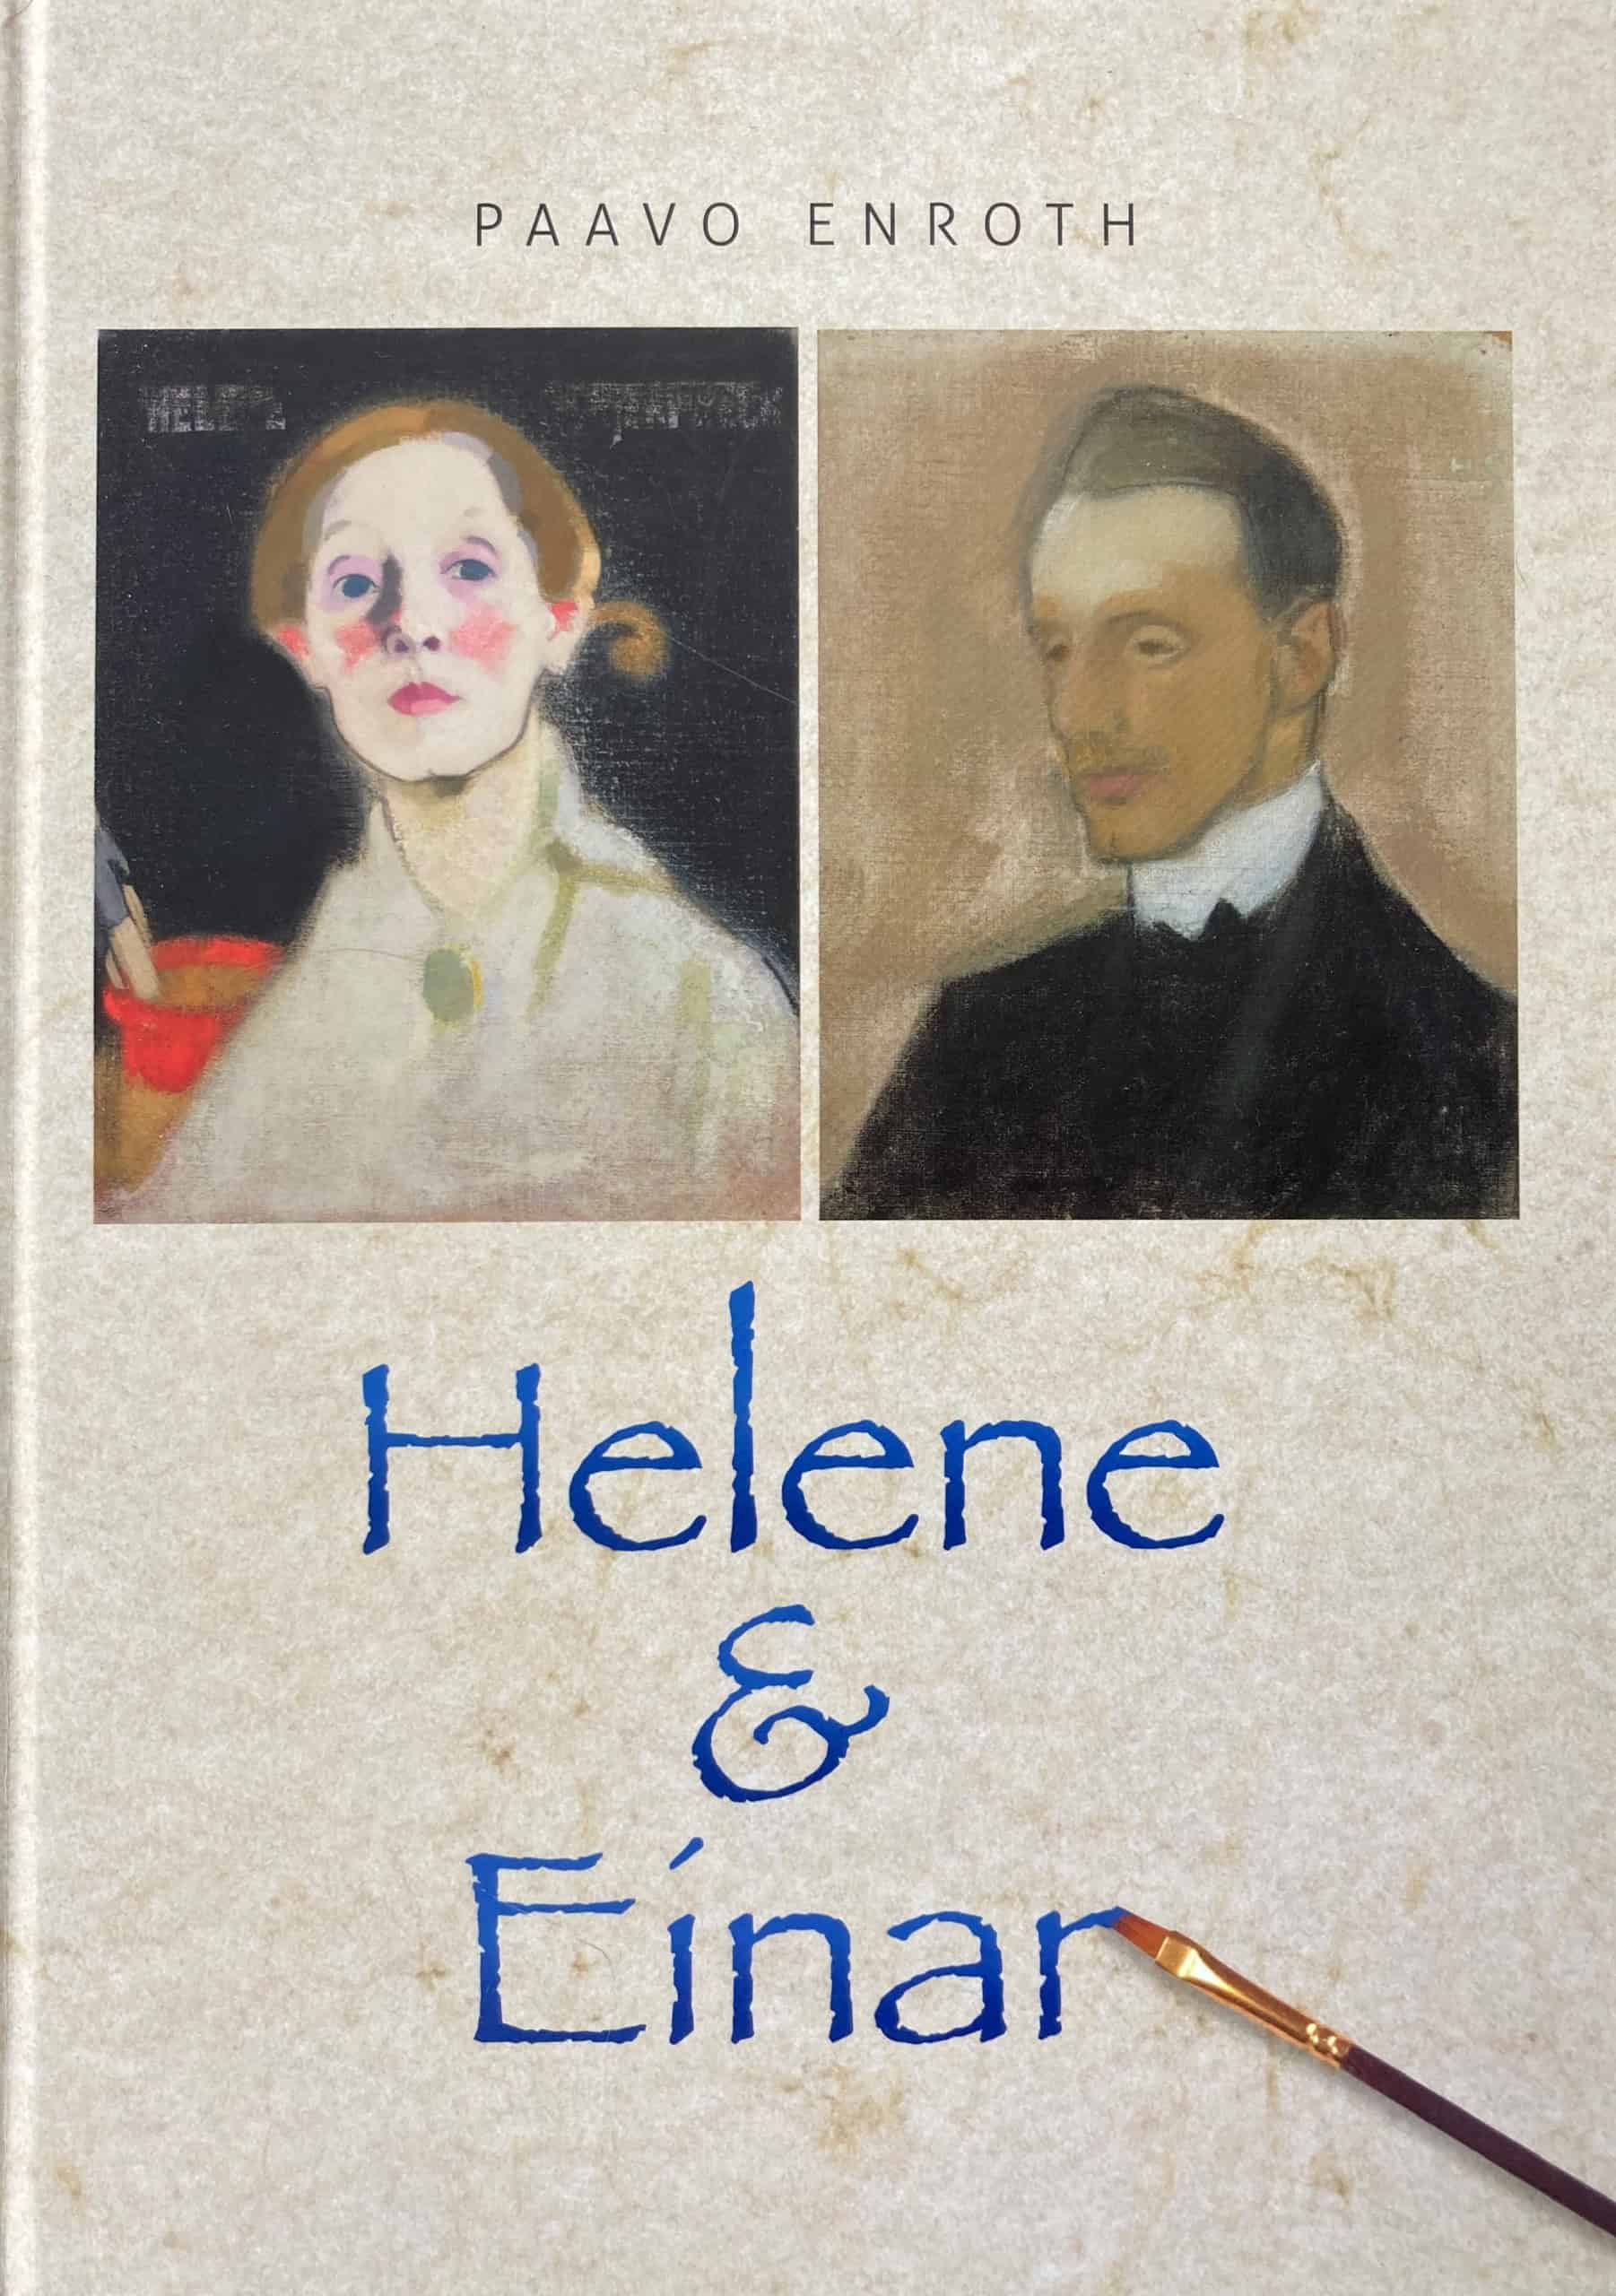 Helene & Einar